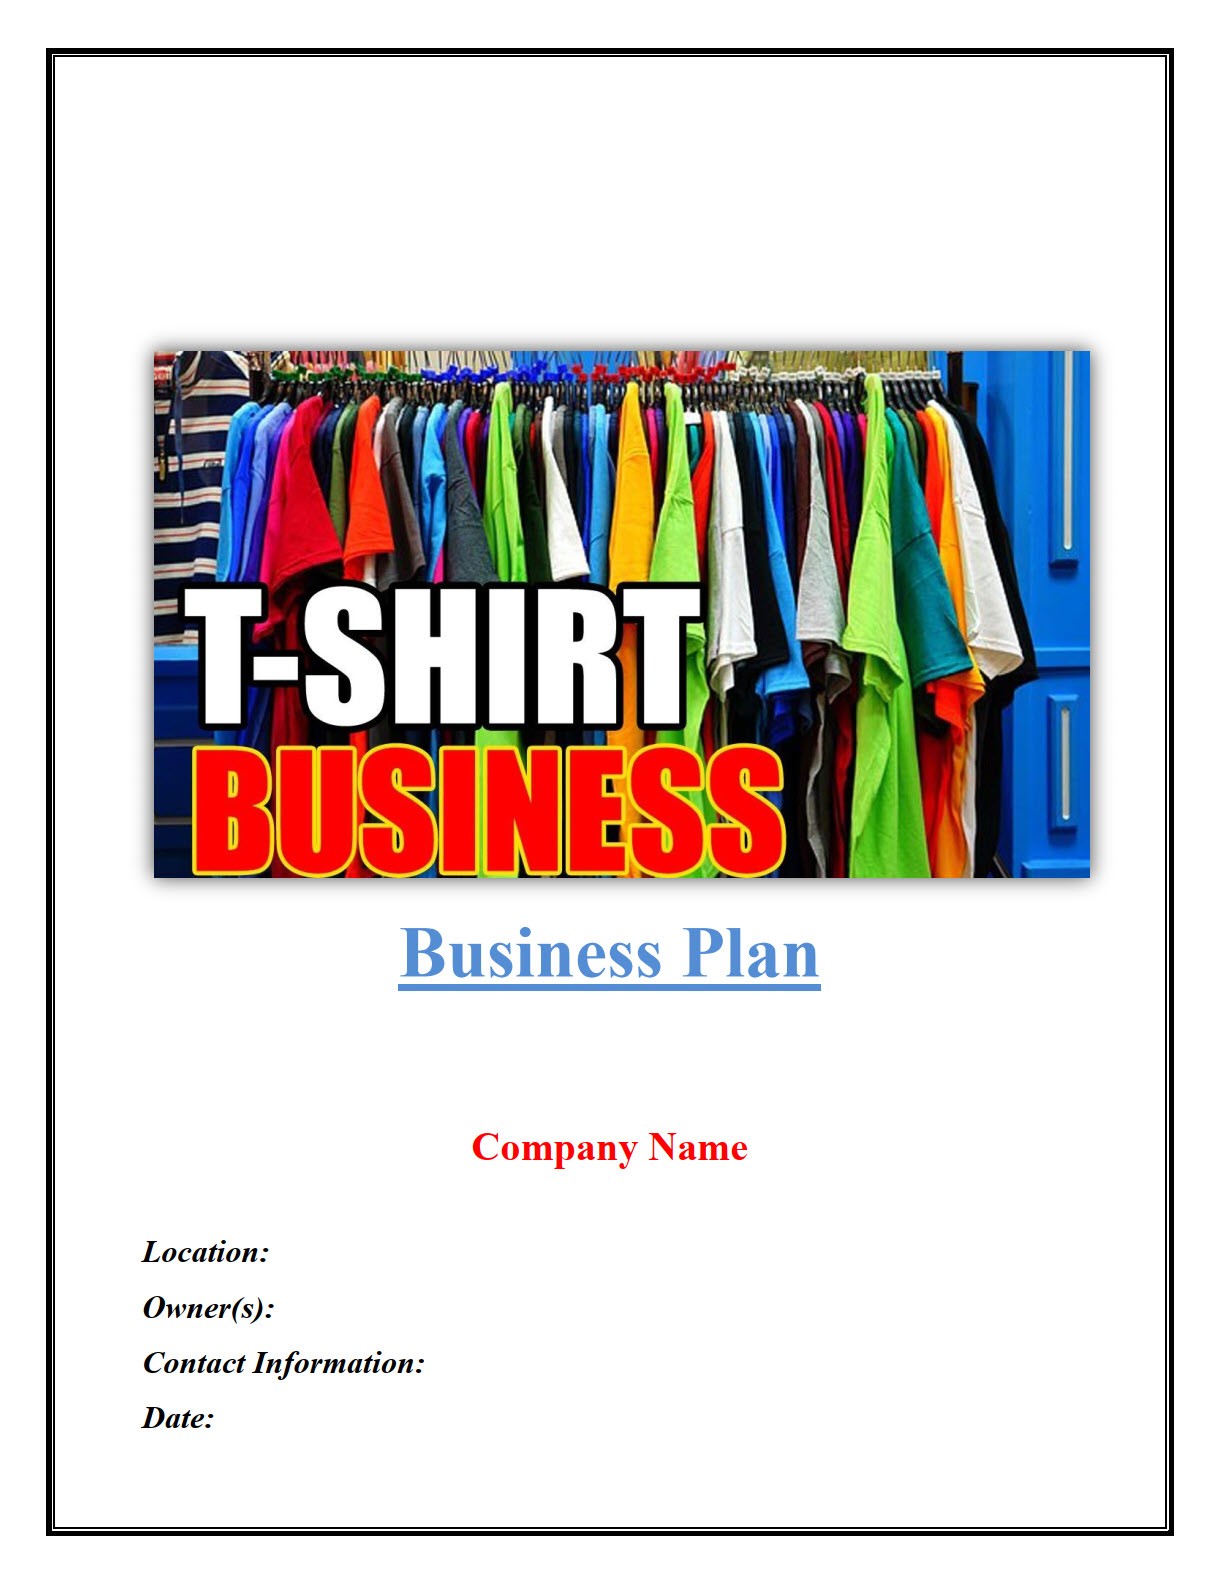 t shirt business plan in hindi